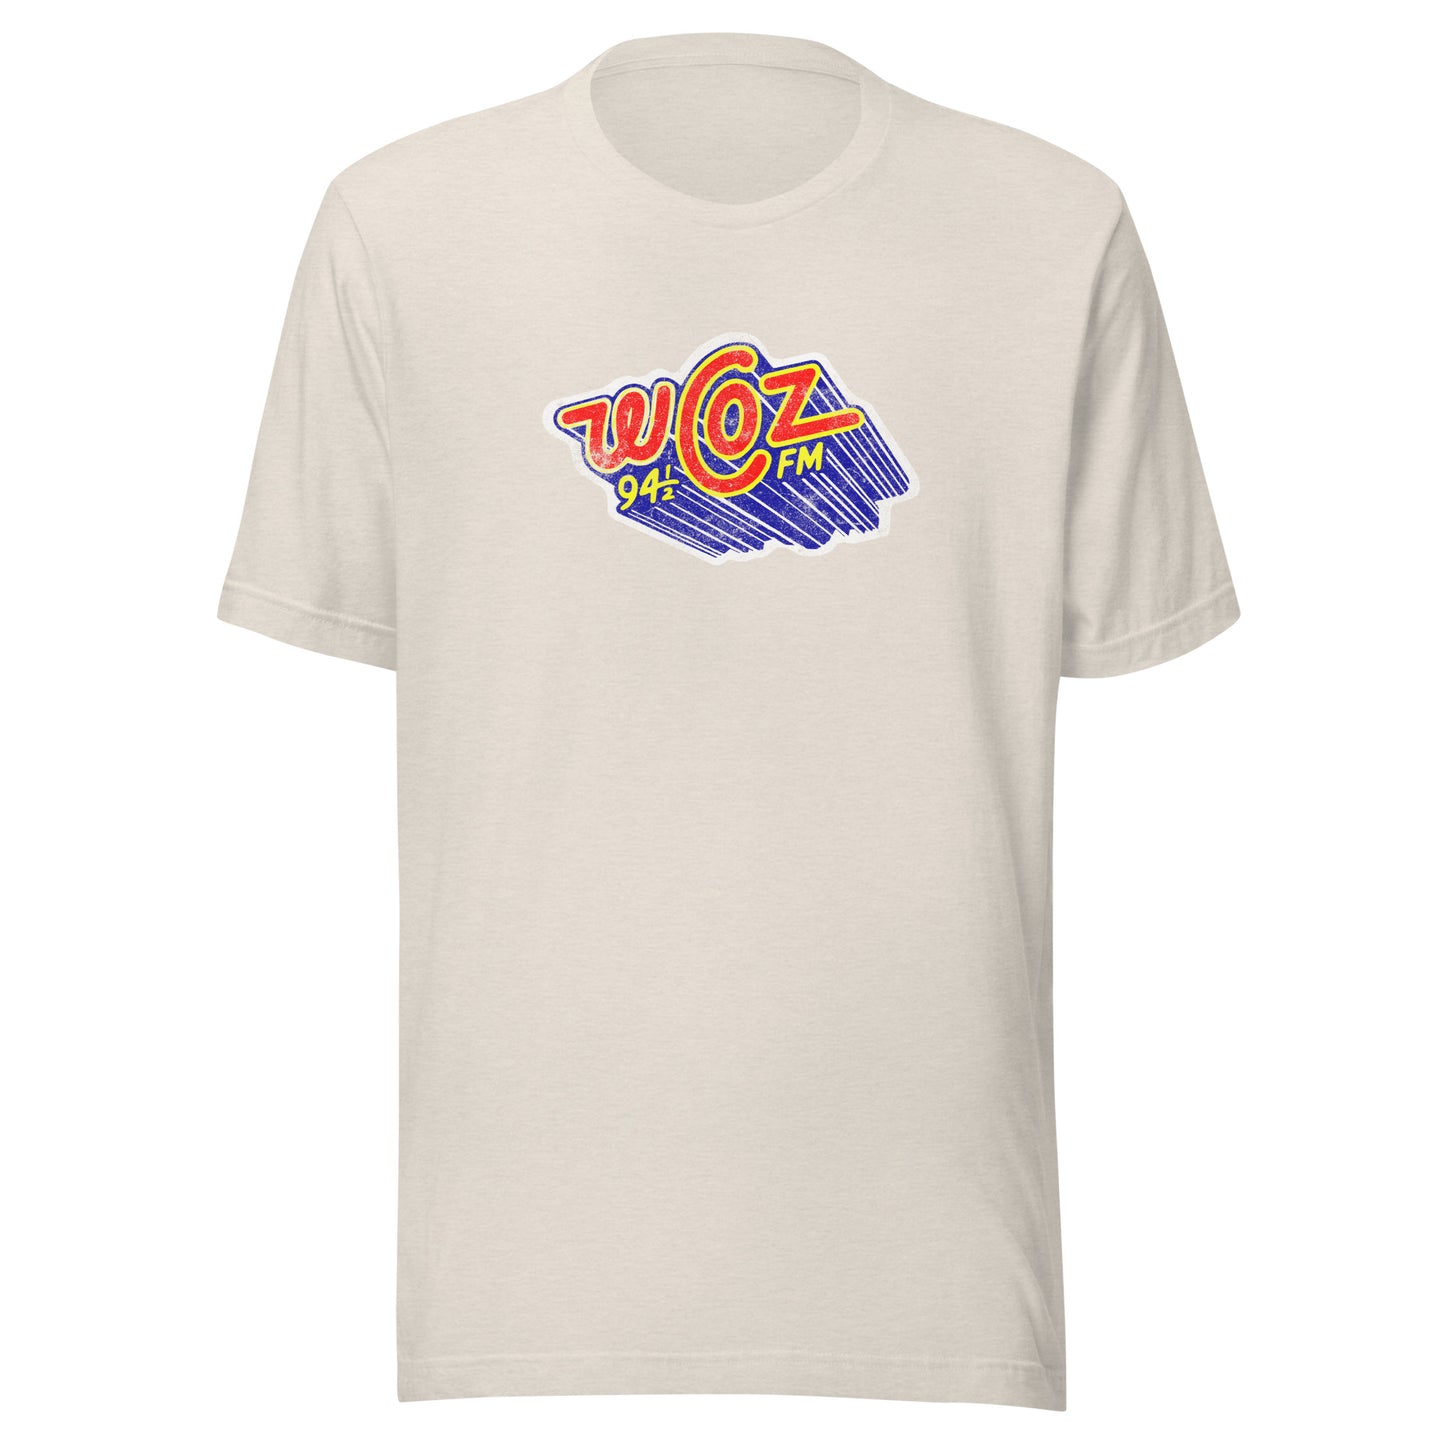 WCOZ Retro T-Shirt - Classic Boston Radio Station | Vintage Throwback Old School Tee